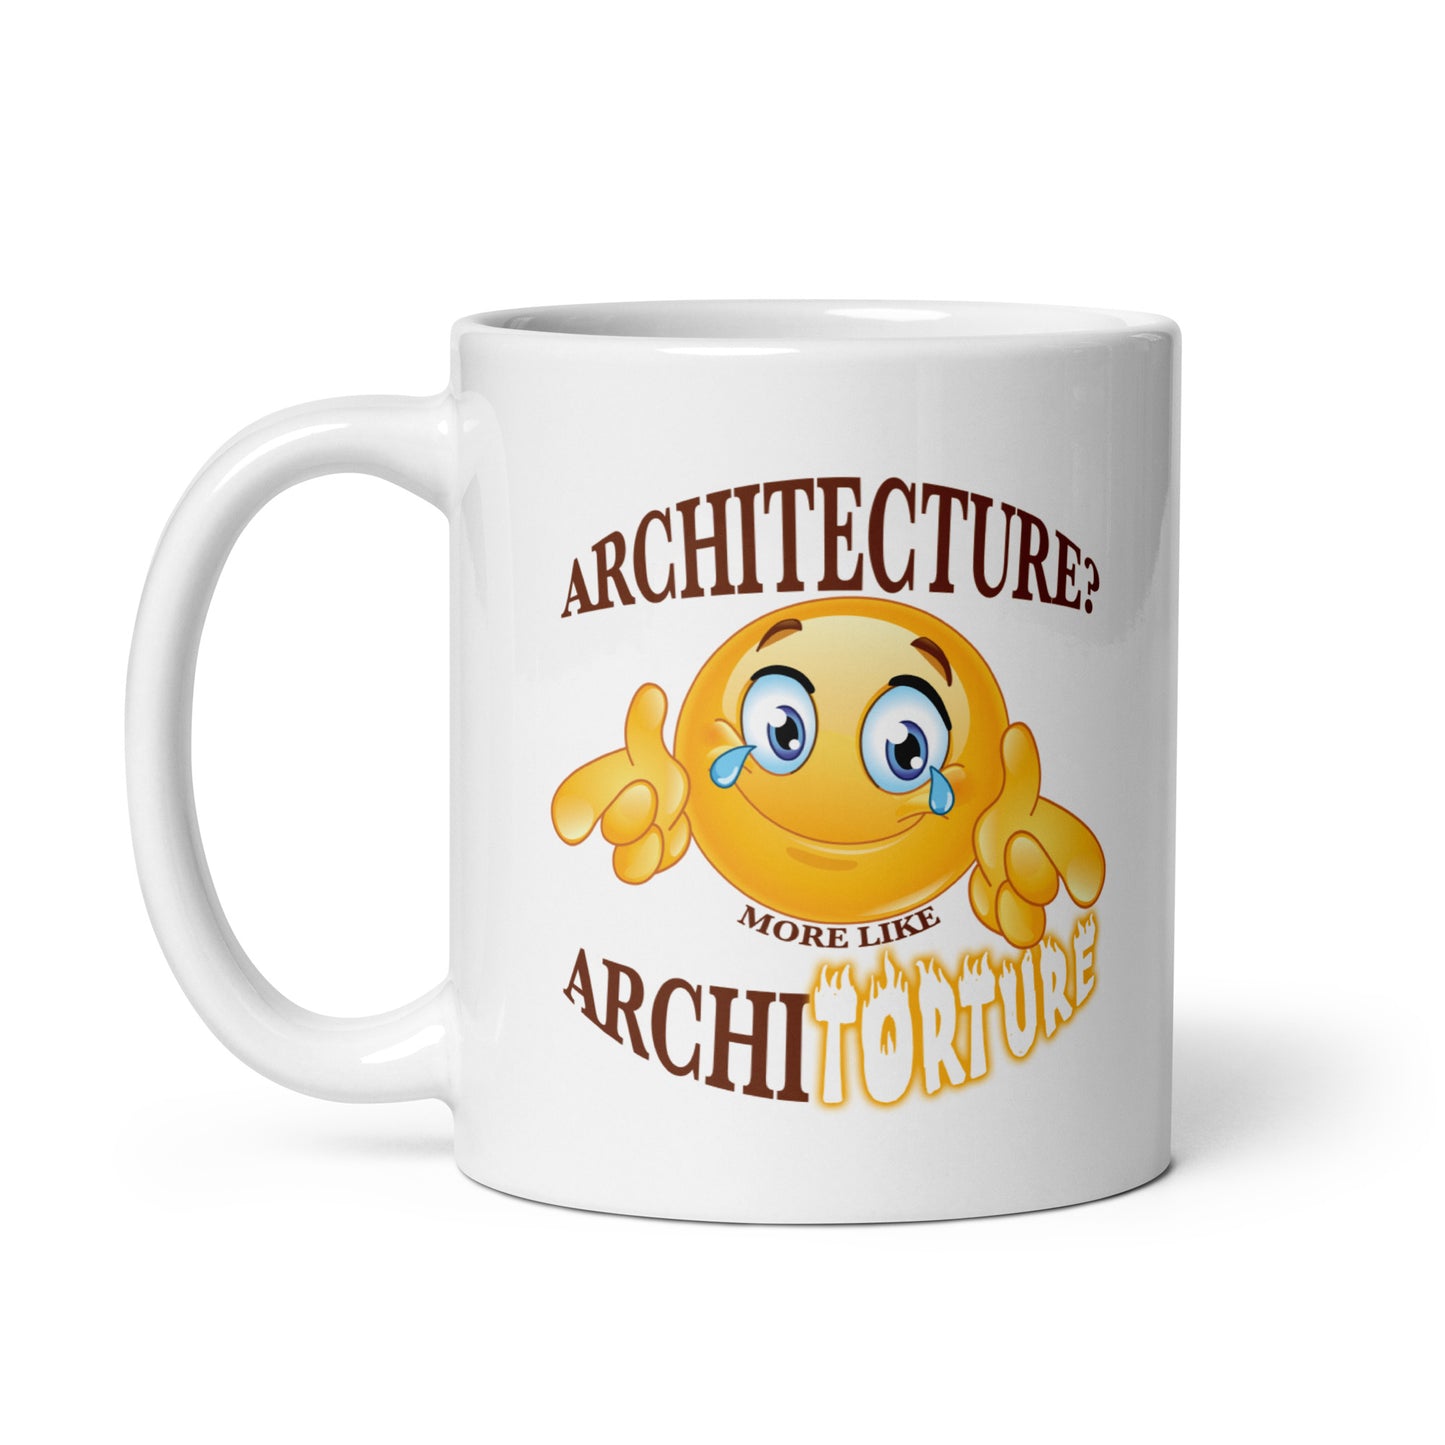 Architecture (Architorture) mug